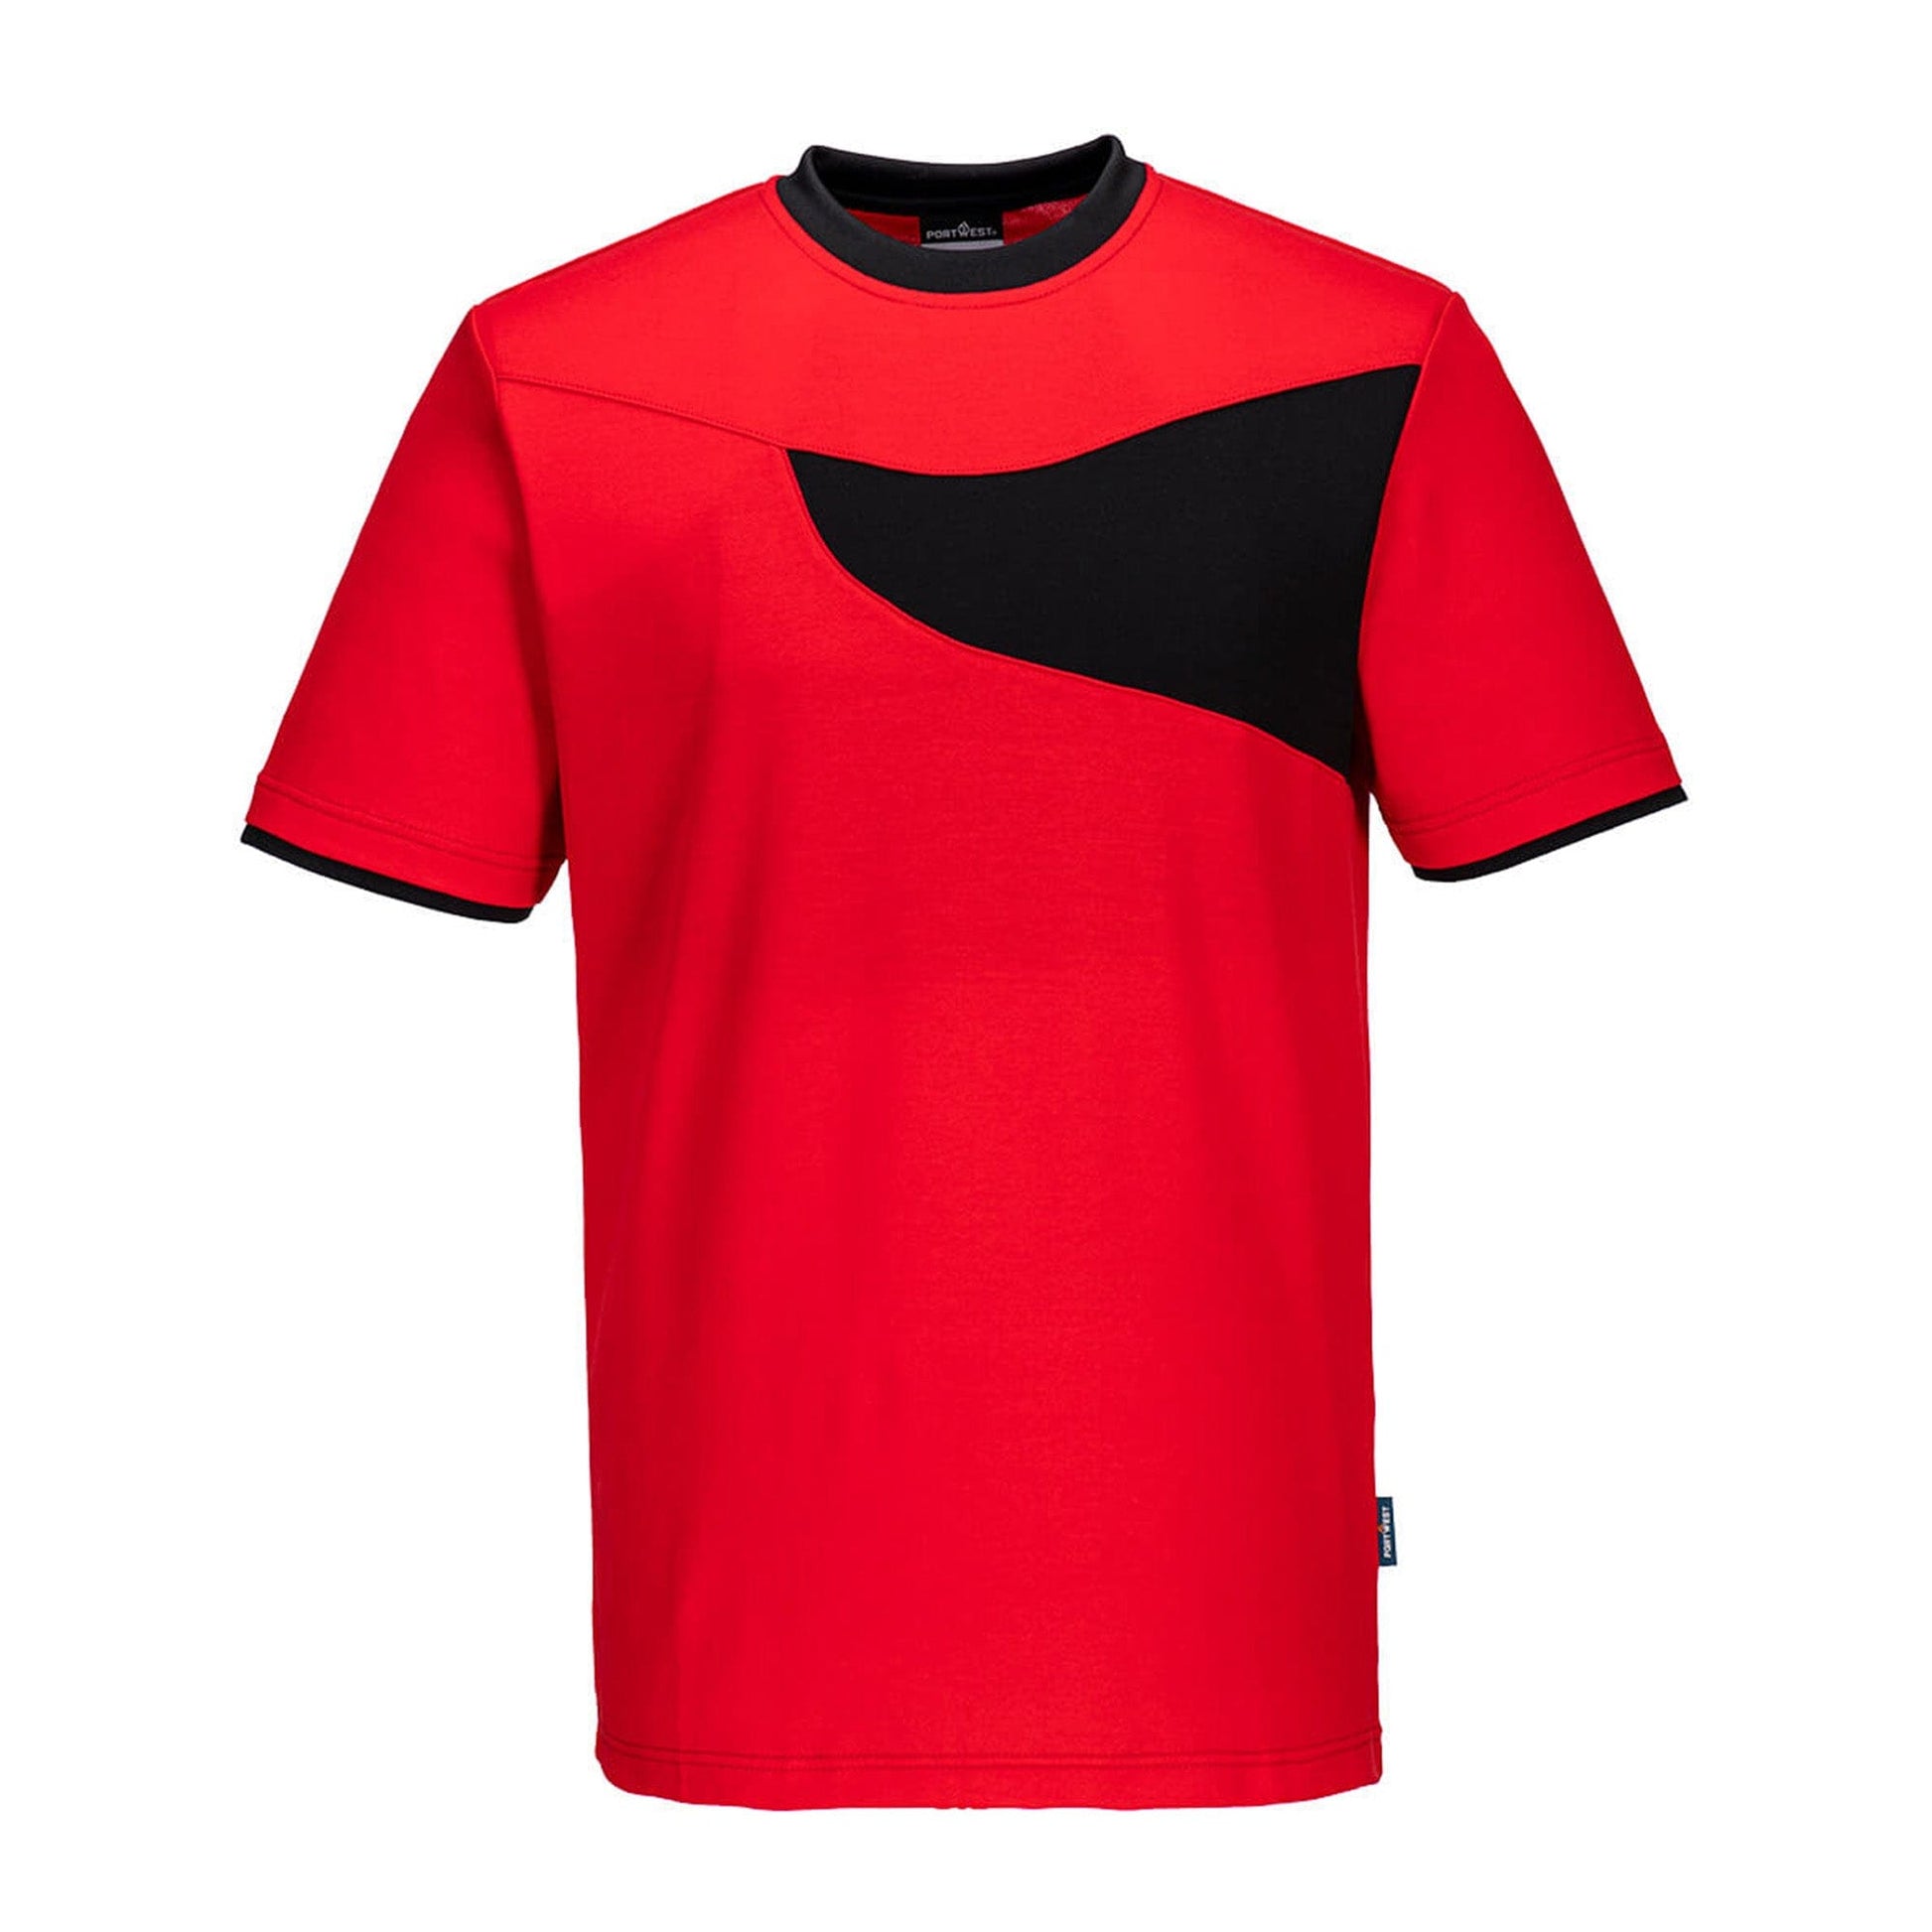 Portwest PW2 Cotton Comfort T-Shirt PW211 Red/Black